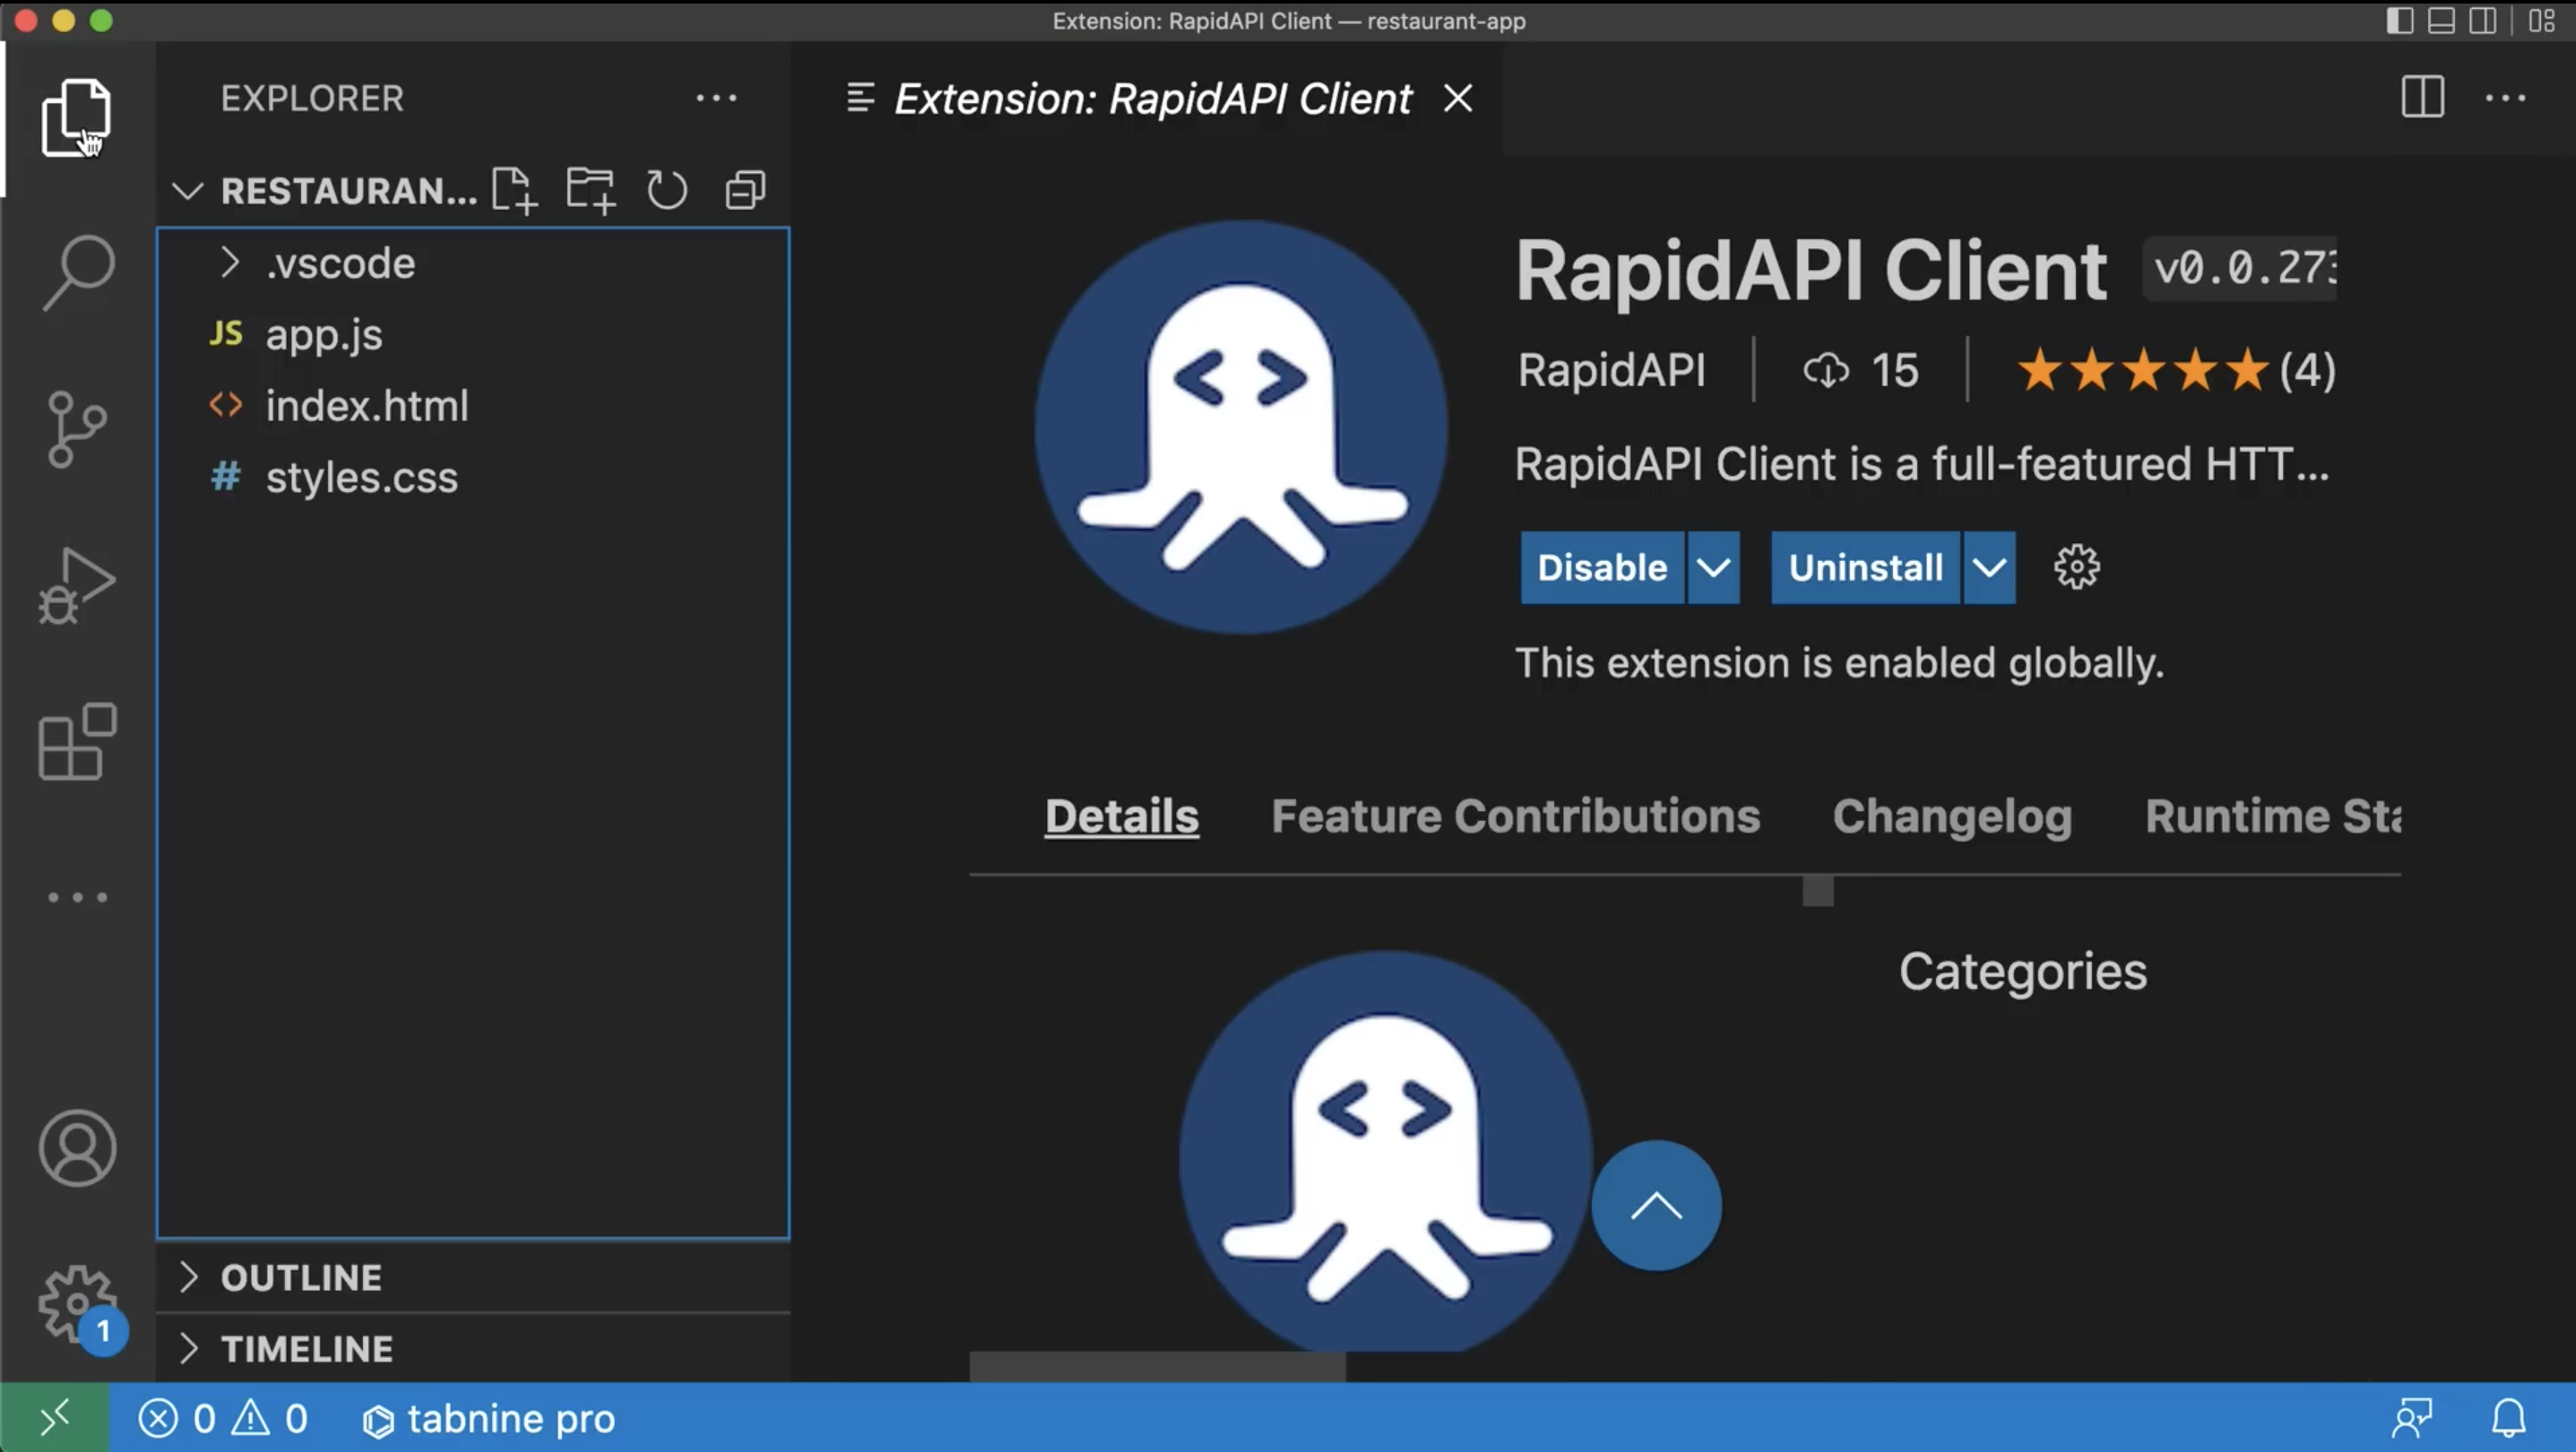 Installing RapidAPI Client